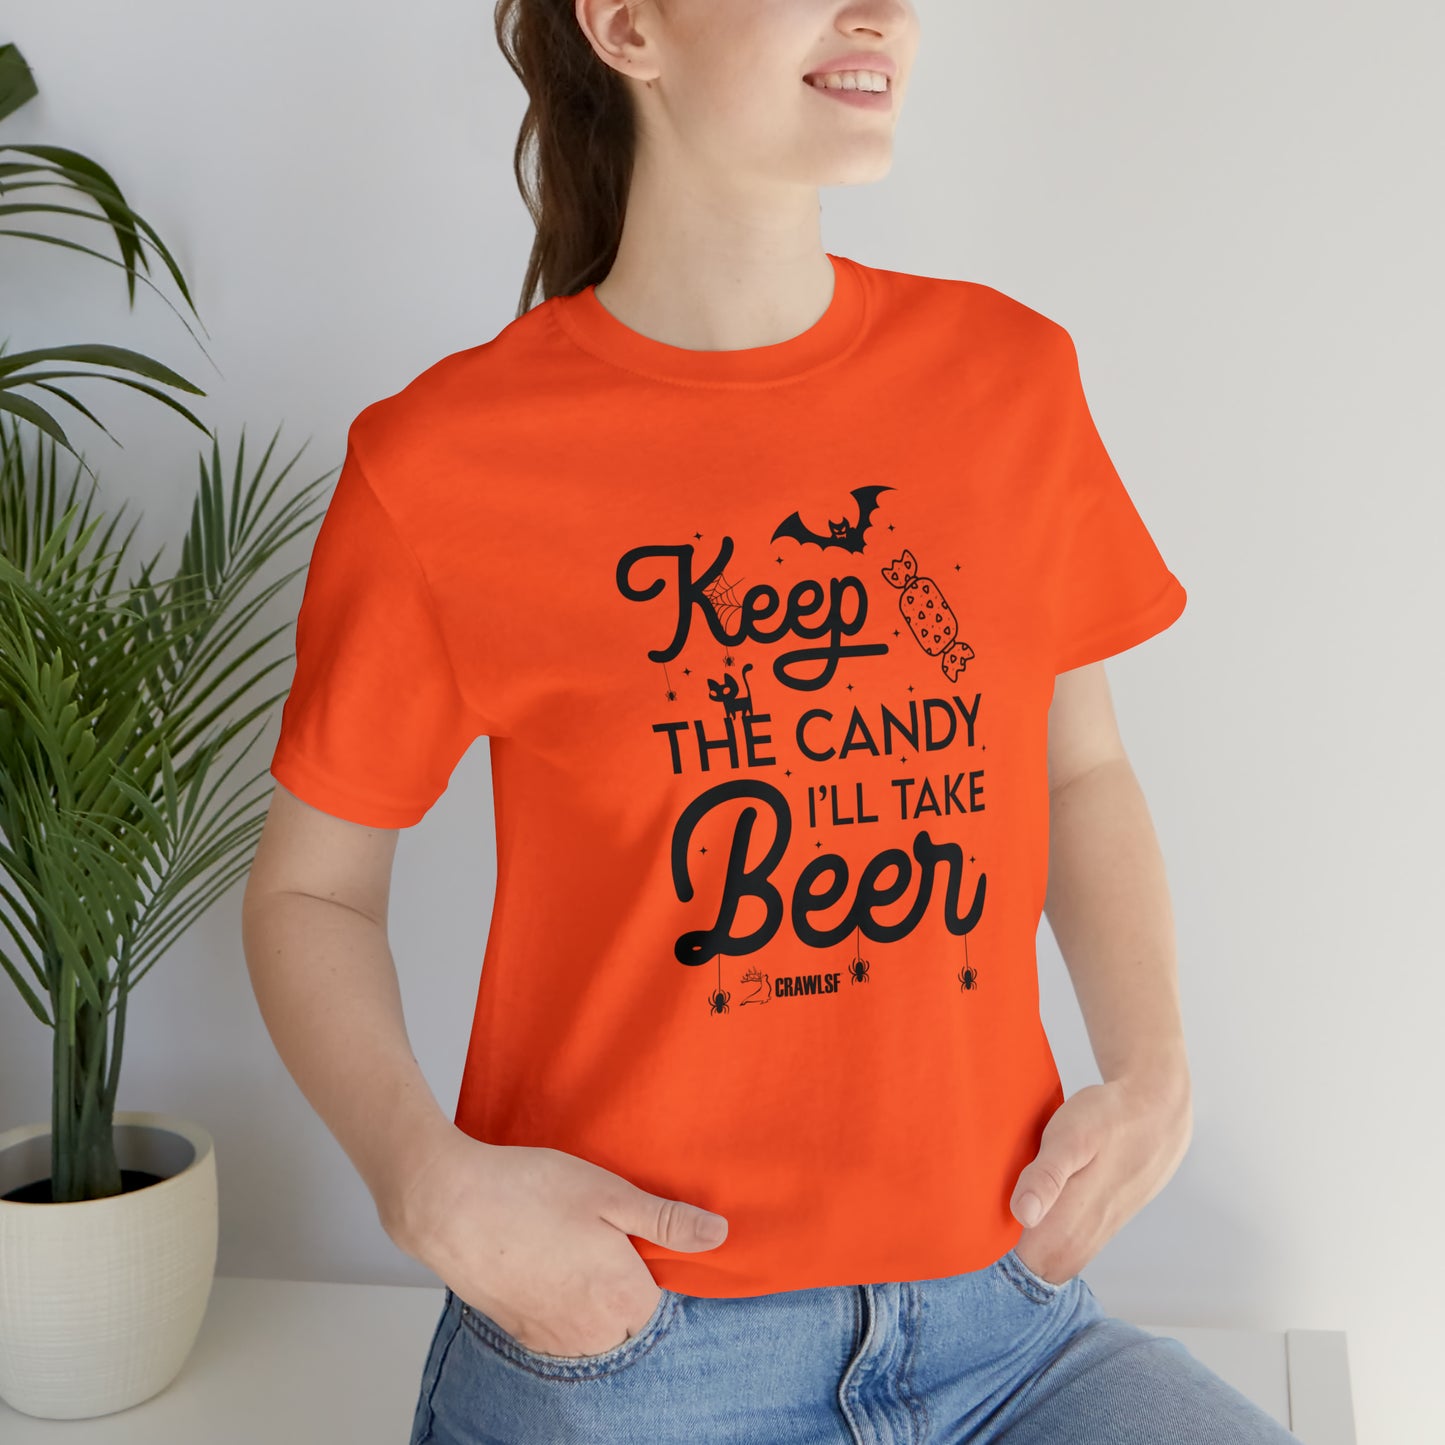 Beer Over Candy Halloween Shirt